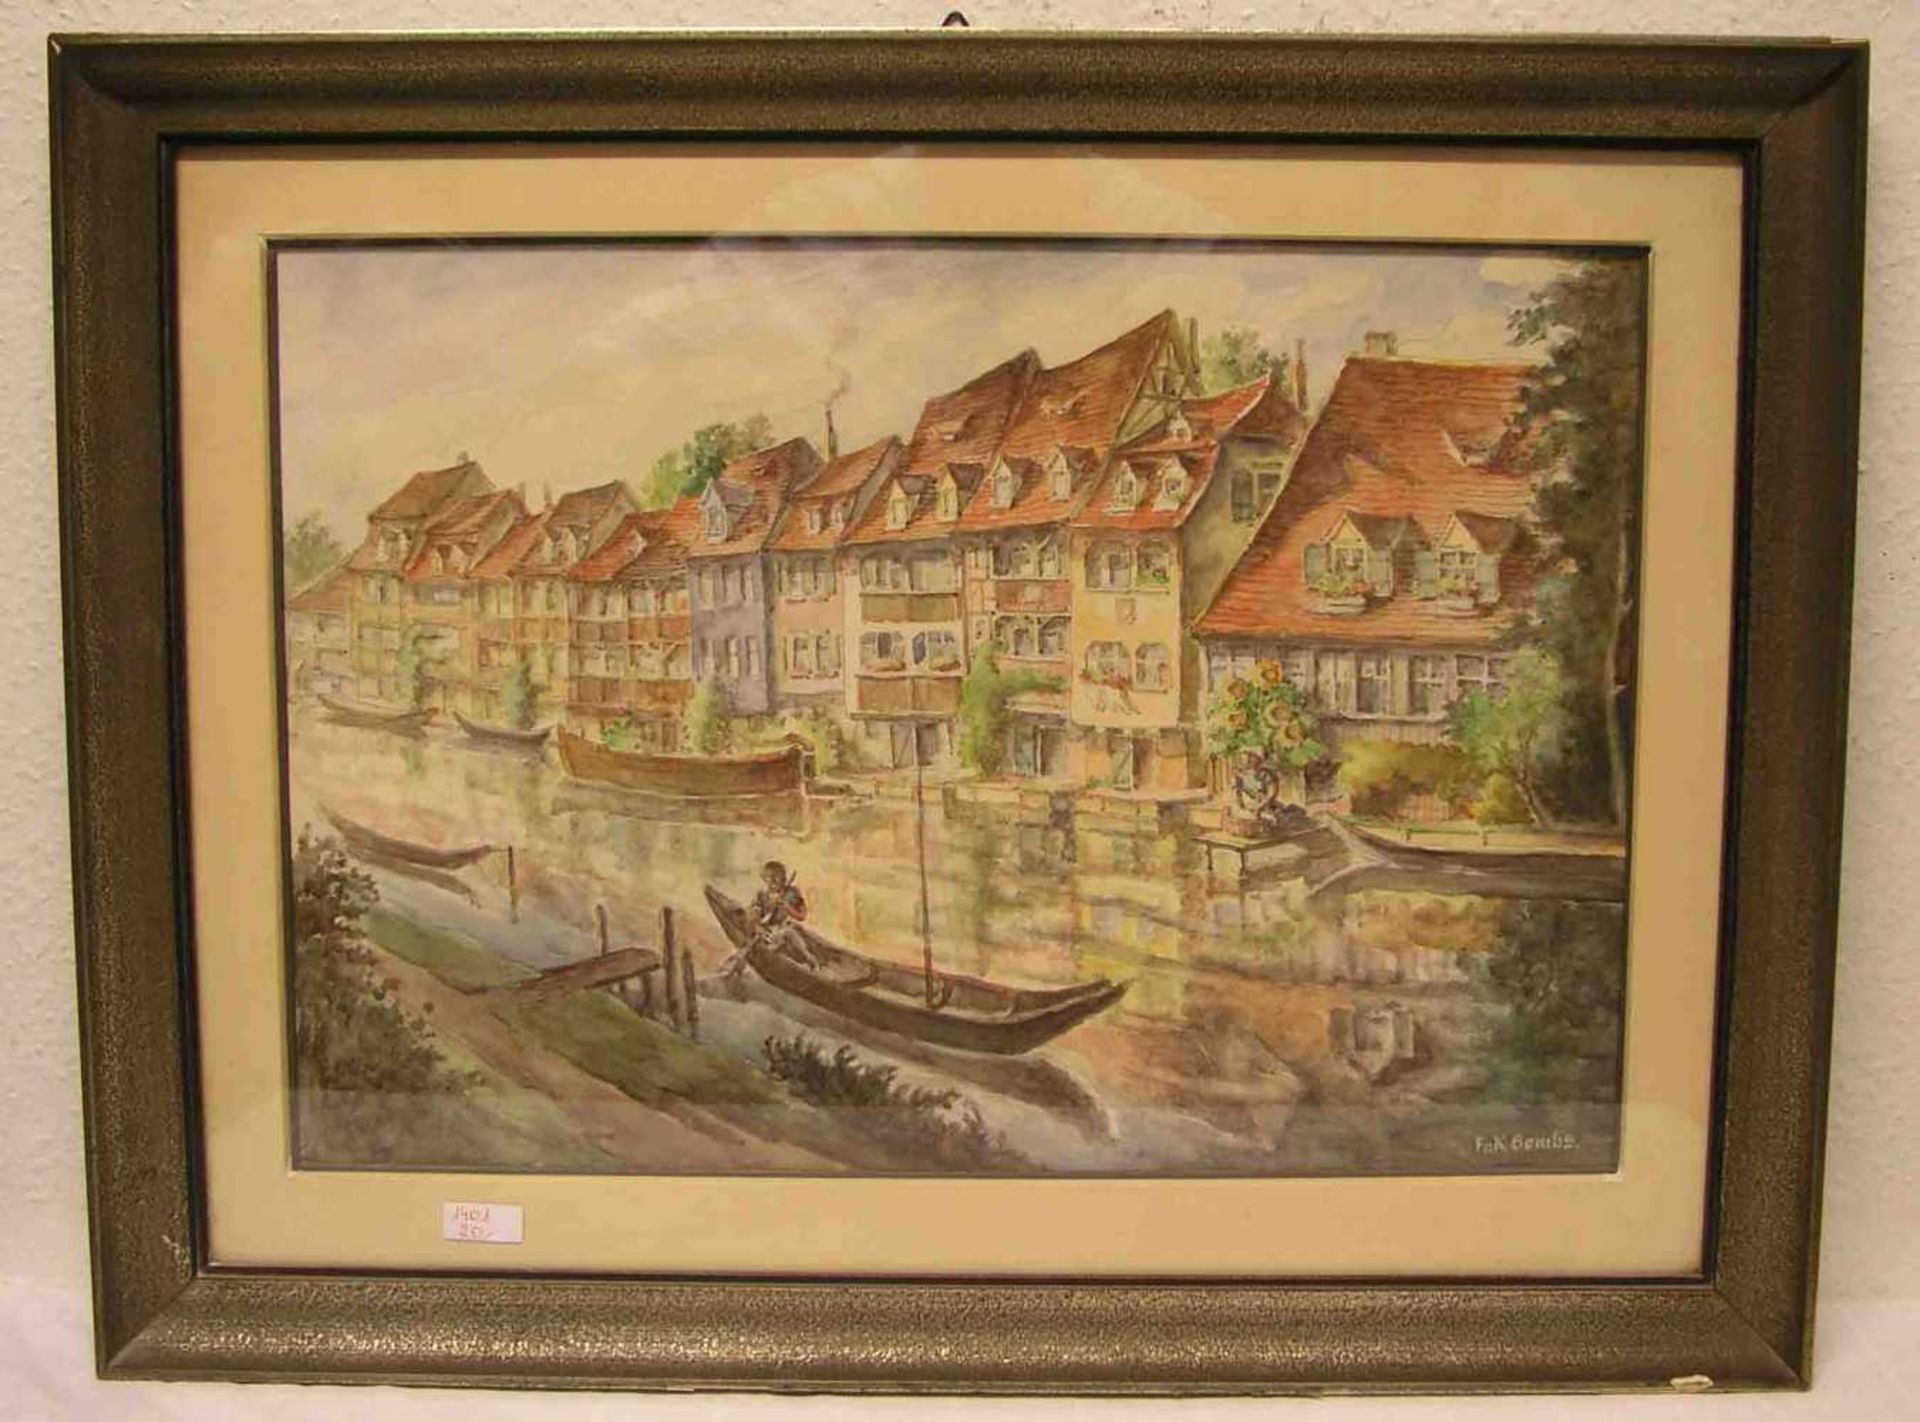 Gembs, Karl (Bamberger Maler 1929 - 1974): "Bamberg. Klein Venedig". Aquarell, signiert,40 x 59cm,